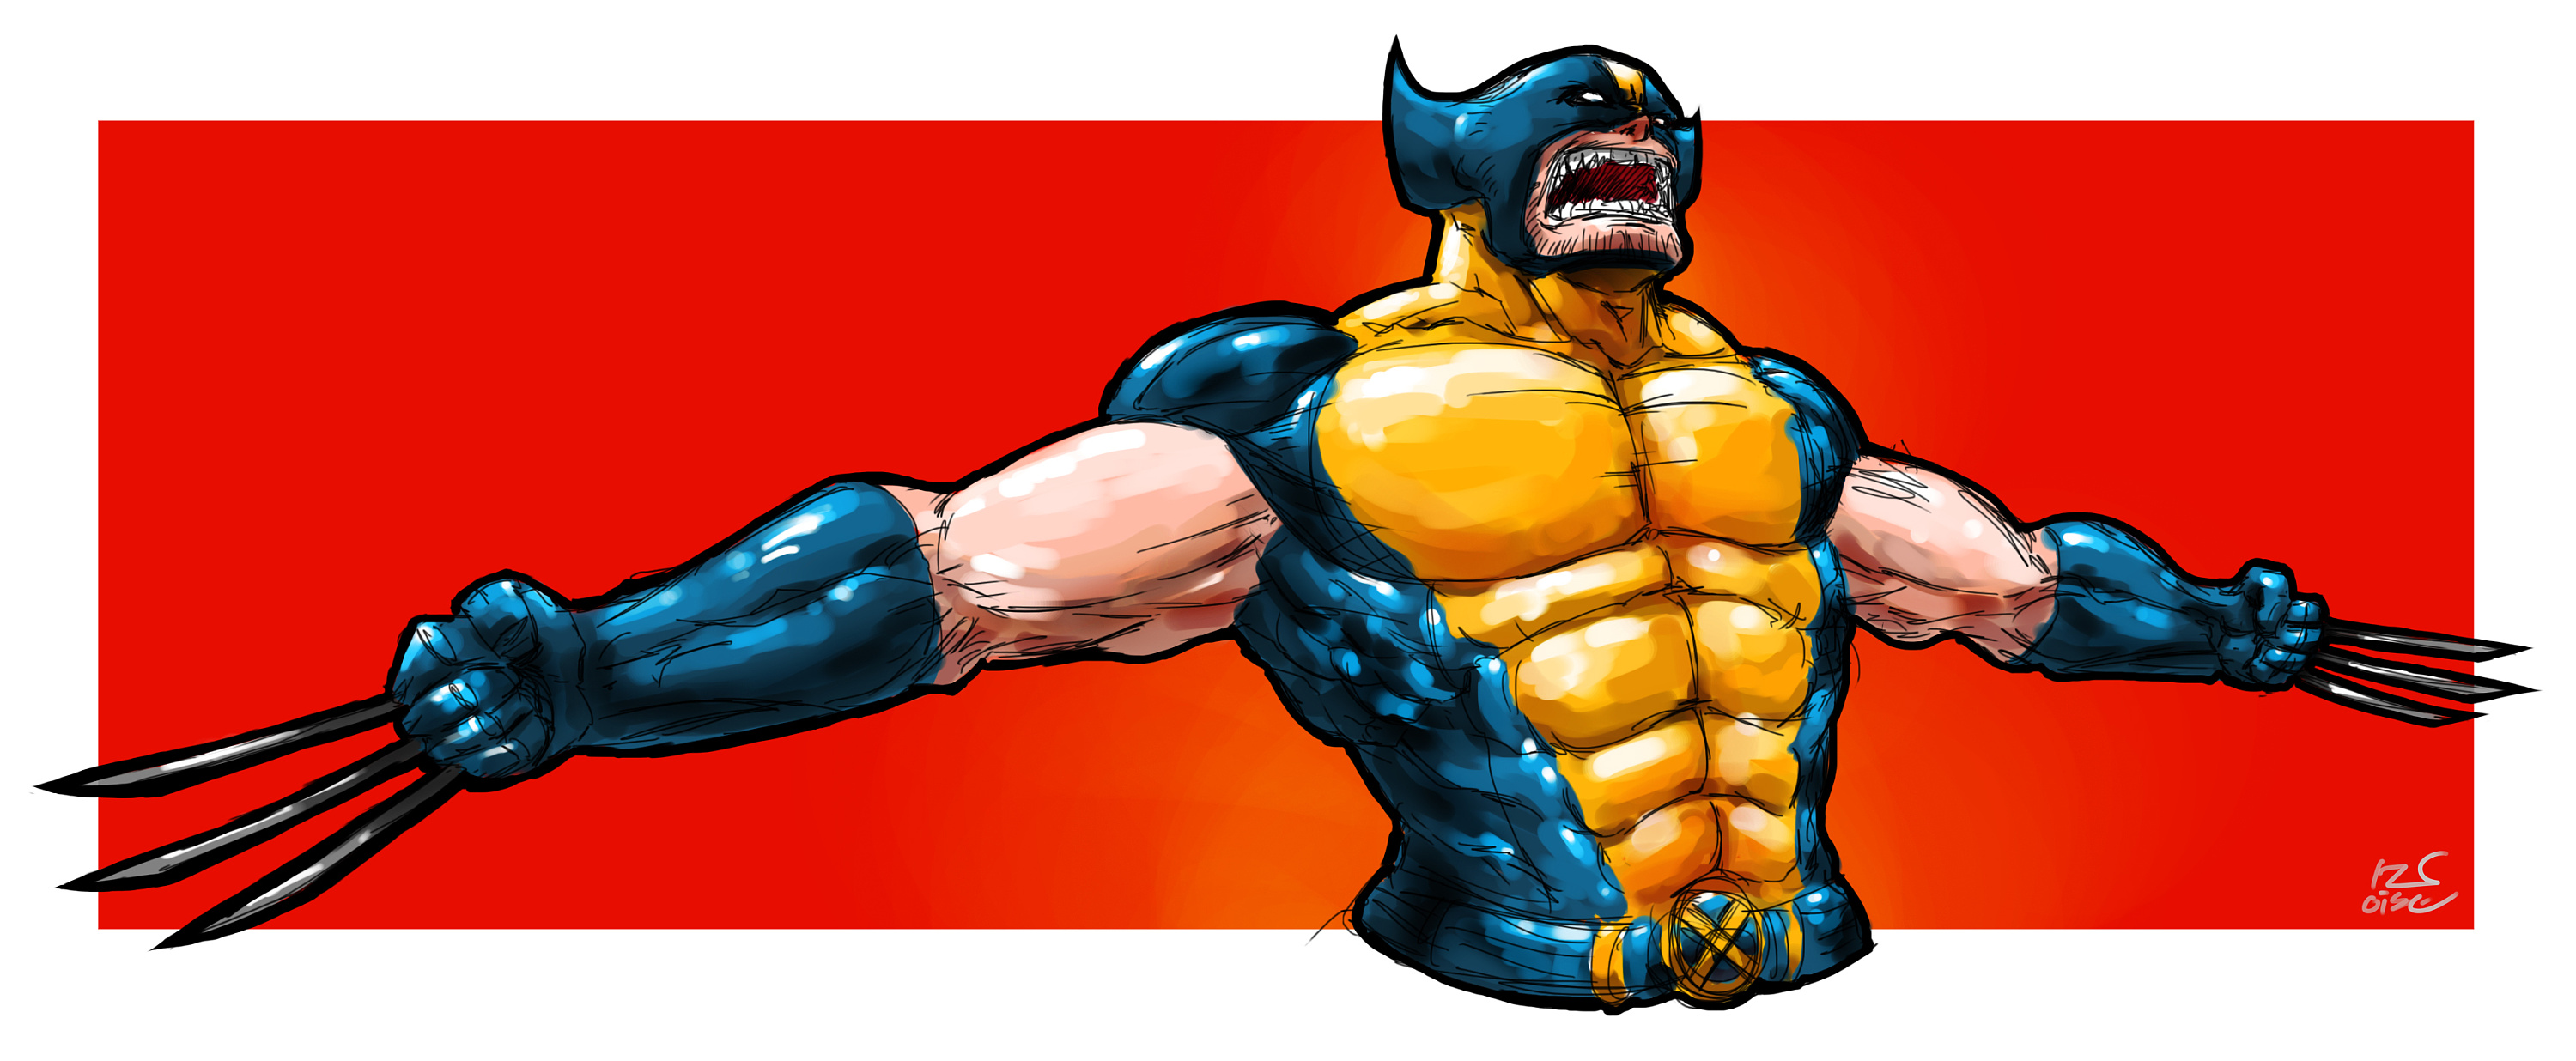 [金刚狼2]The.Wolverine.2013.EXTENDED.1080p.BluRay.REMUX.DTS-HD.MA.7.1 26 ...